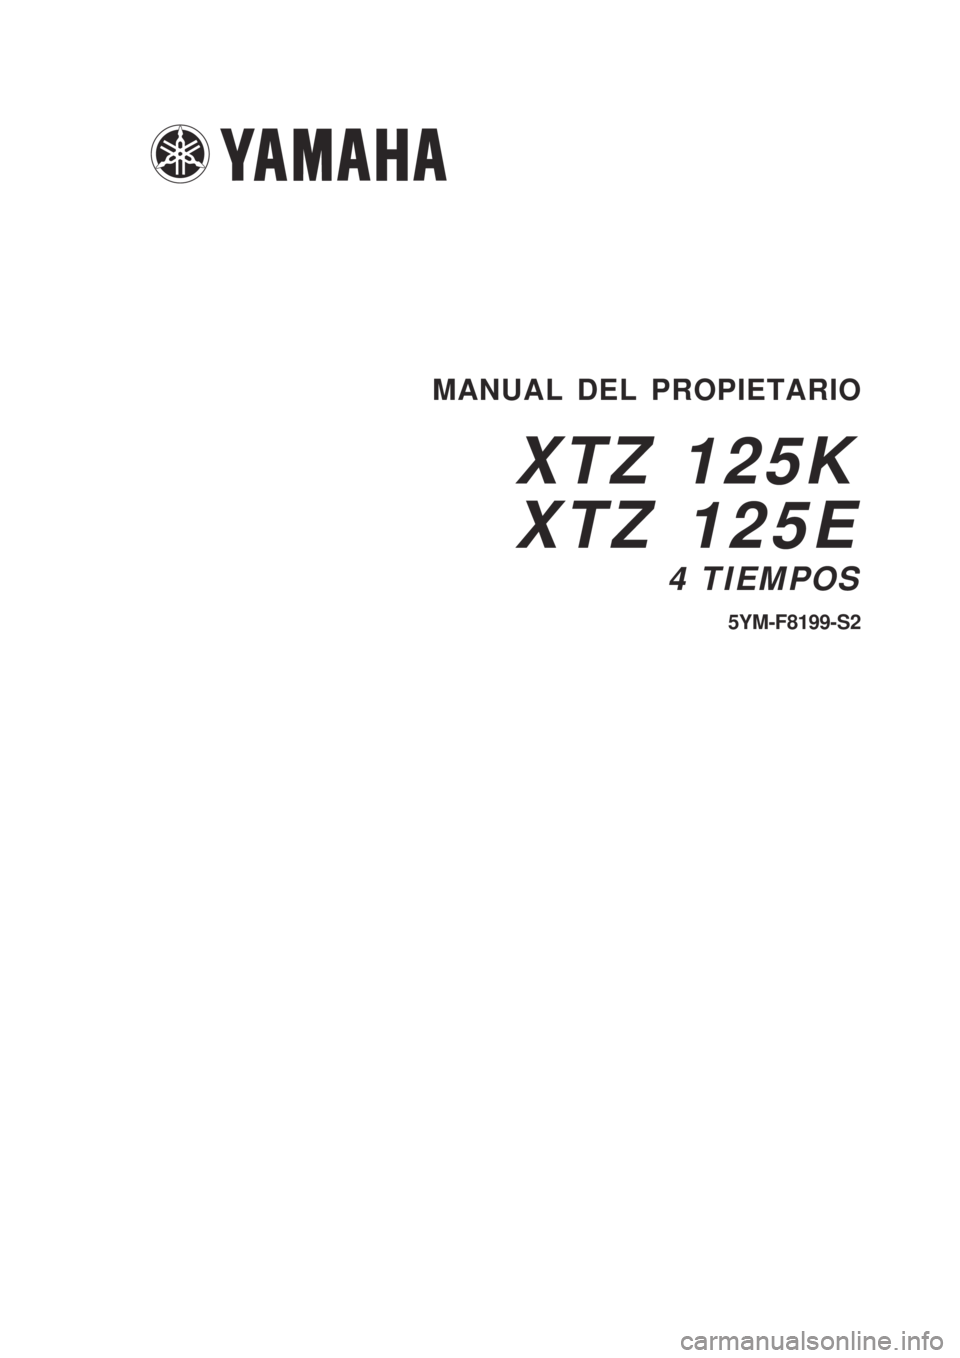 YAMAHA XTZ125 2007  Manuale de Empleo (in Spanish) 